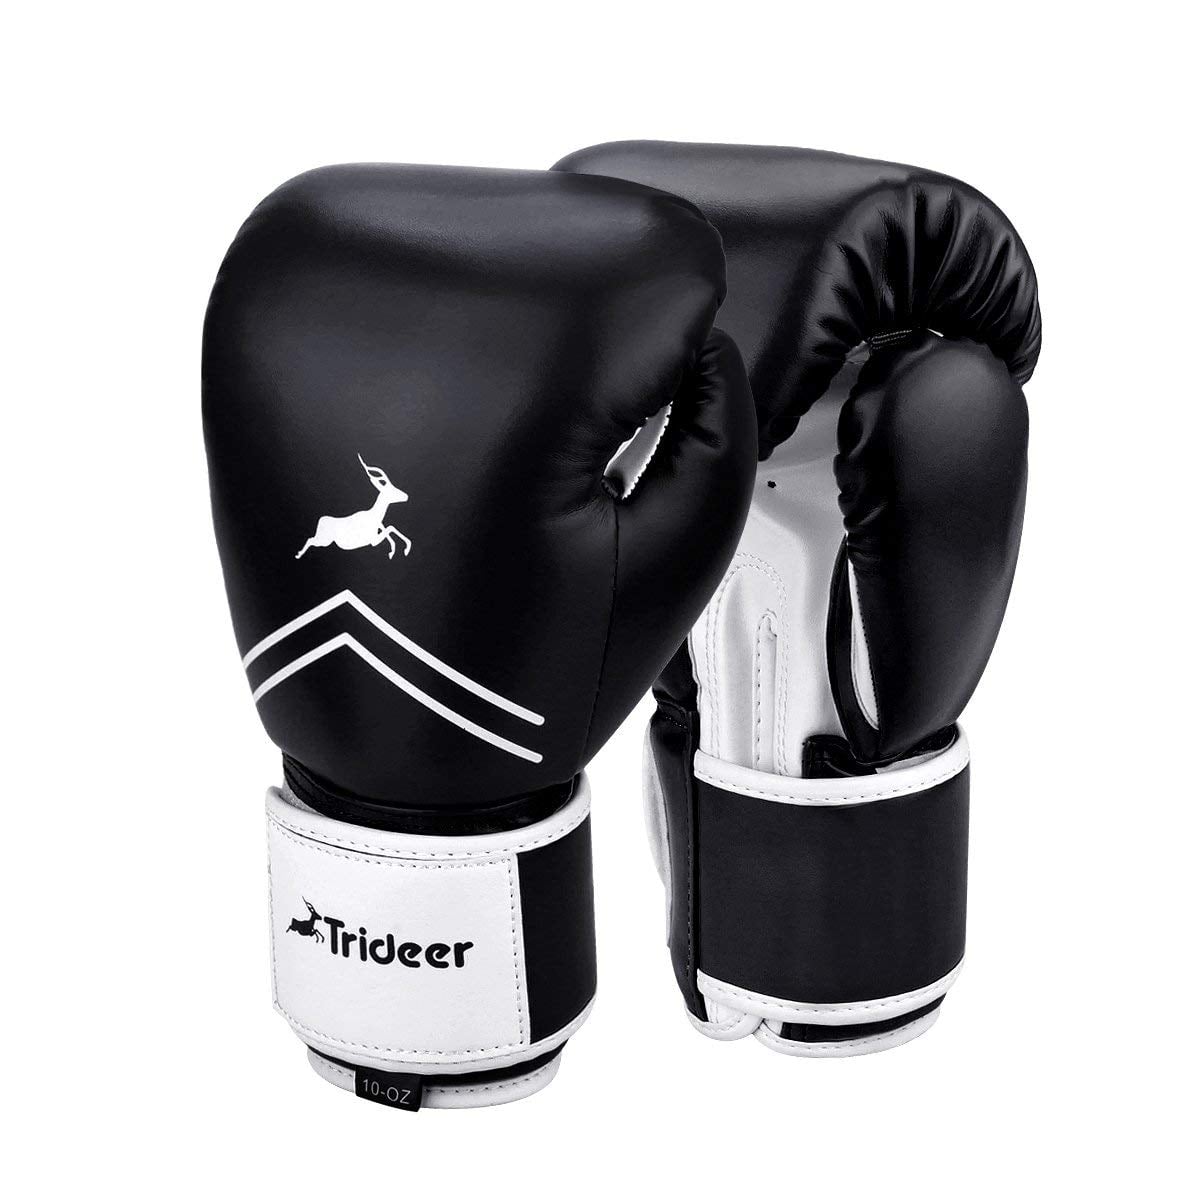 Professional Fight Training Mitt Punching Bag Mit Ladies Boxing Gloves Girls